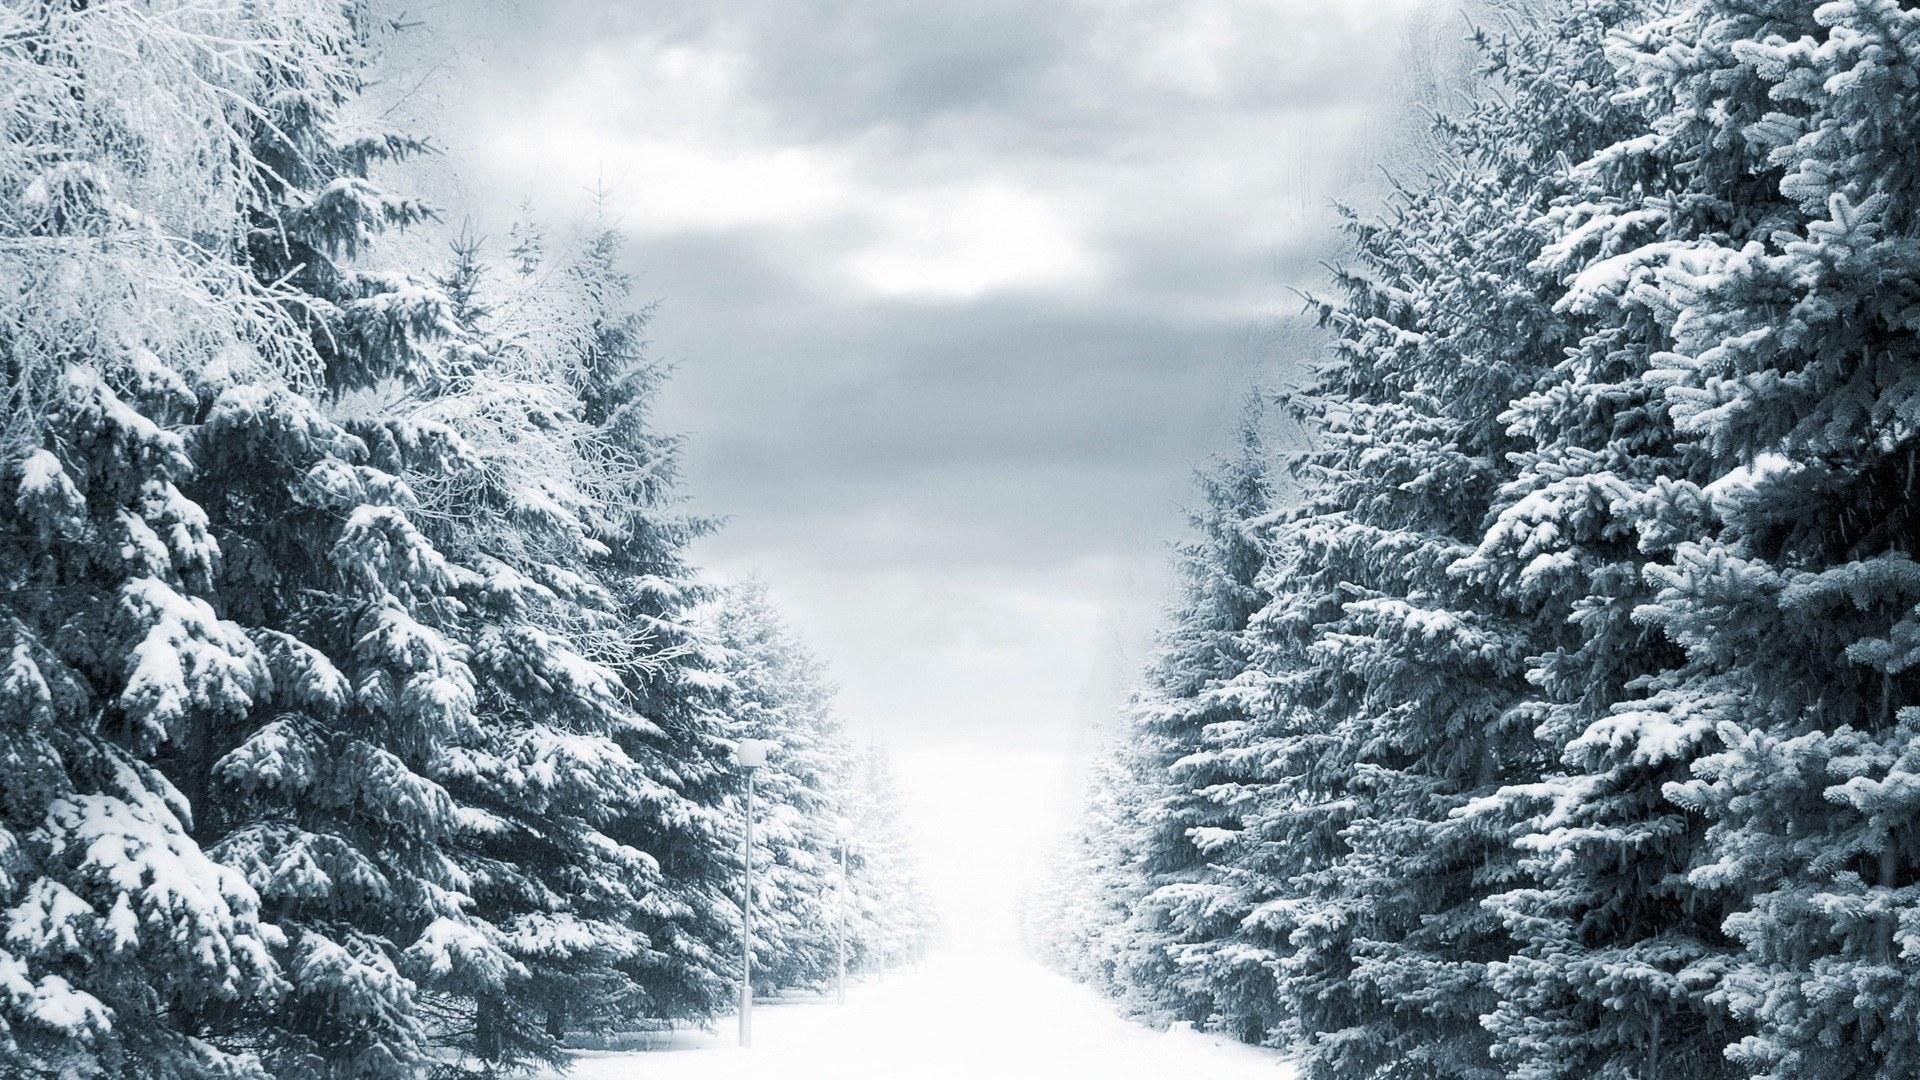 Winter Scene wallpaper pine trees covered in snow. iPhone wallpaper winter, Winter iphone, Winter wallpaper